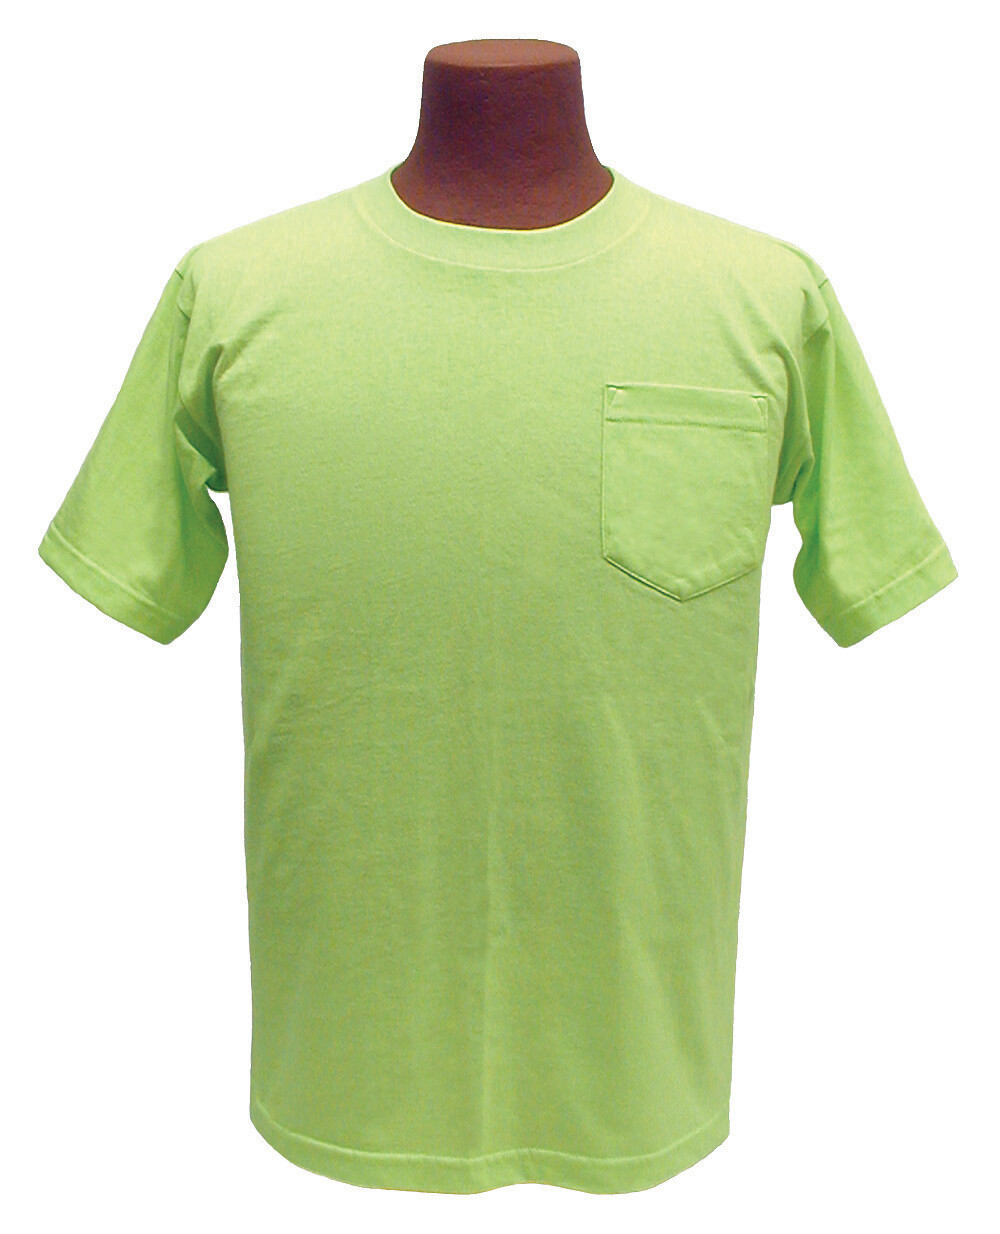 100% Cotton Lime Green 7100 T-Shirt